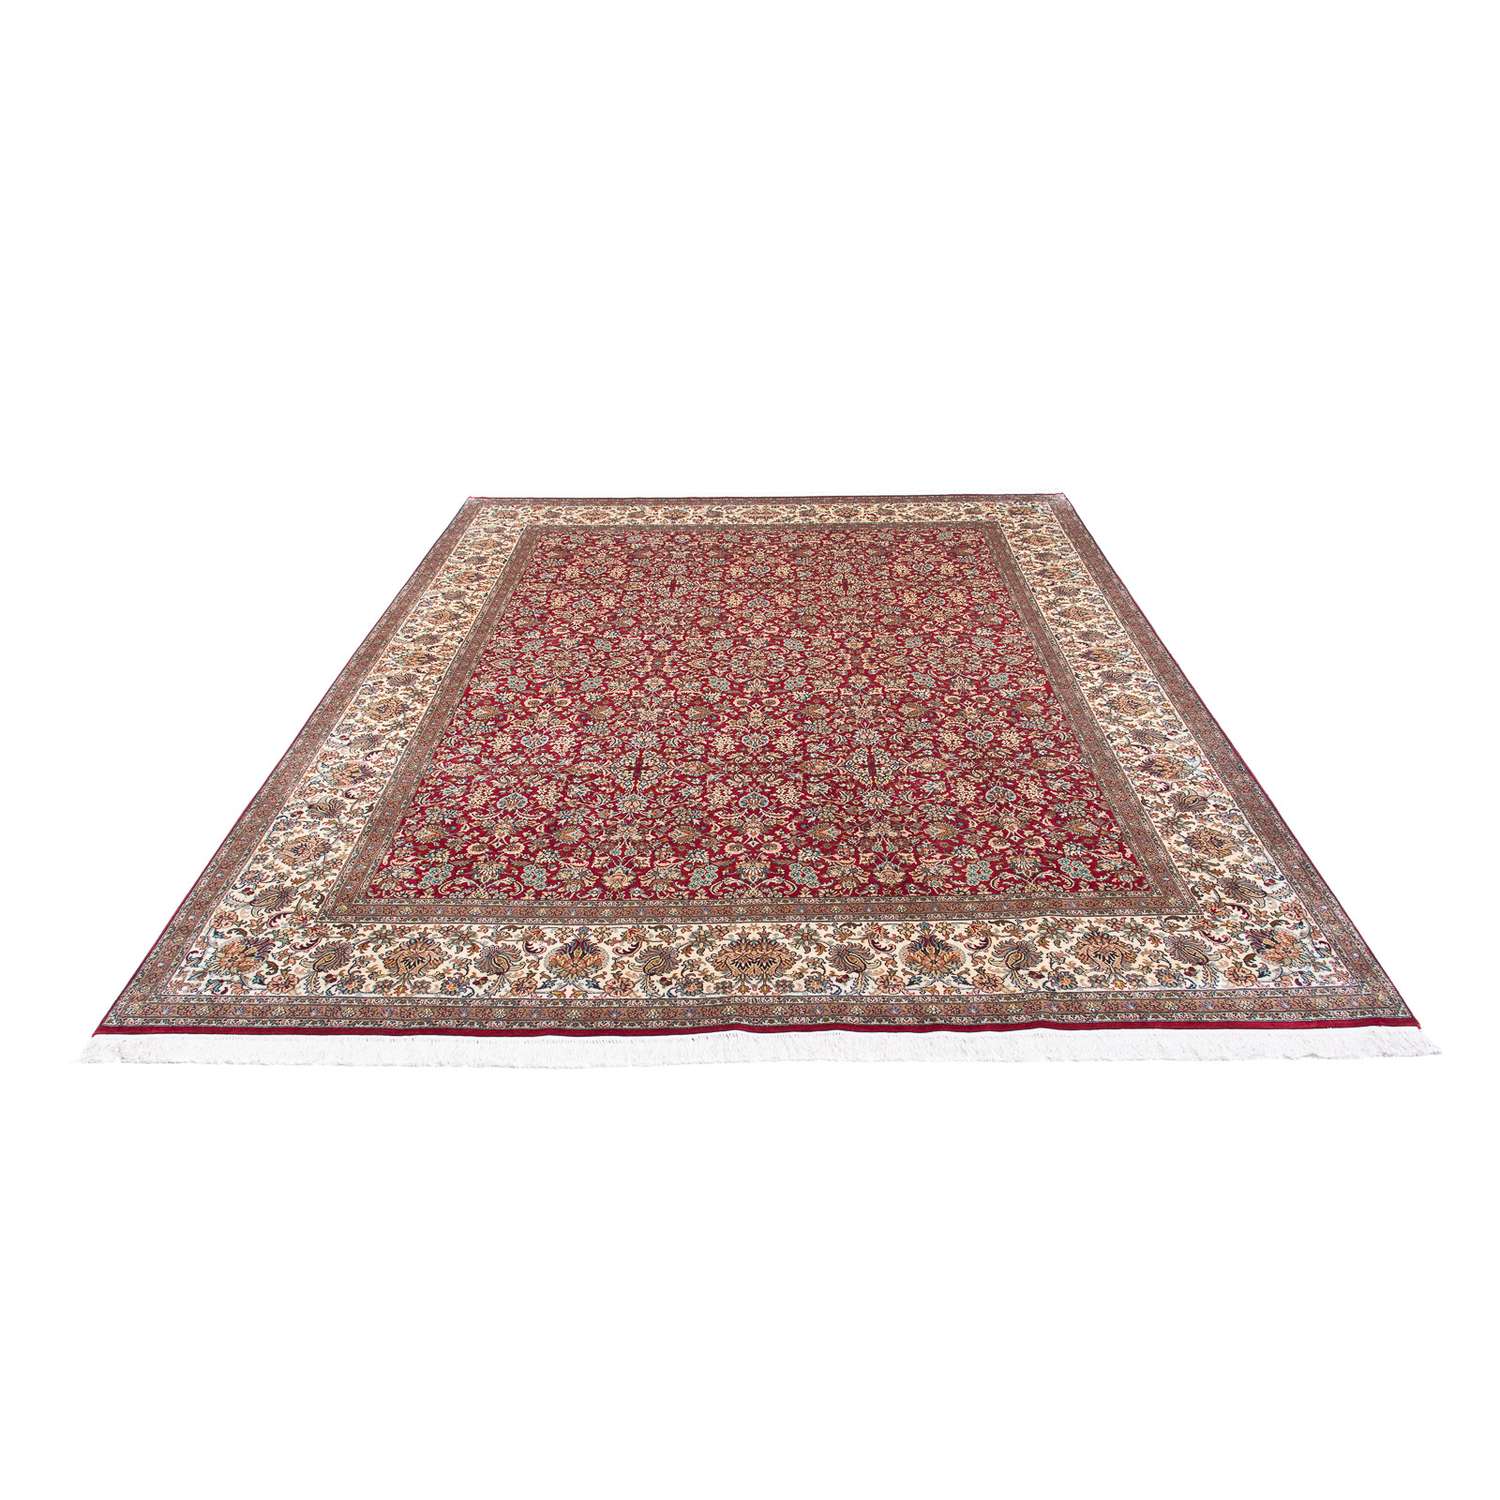 Tapis persan - Classique - 308 x 243 cm - rouge clair